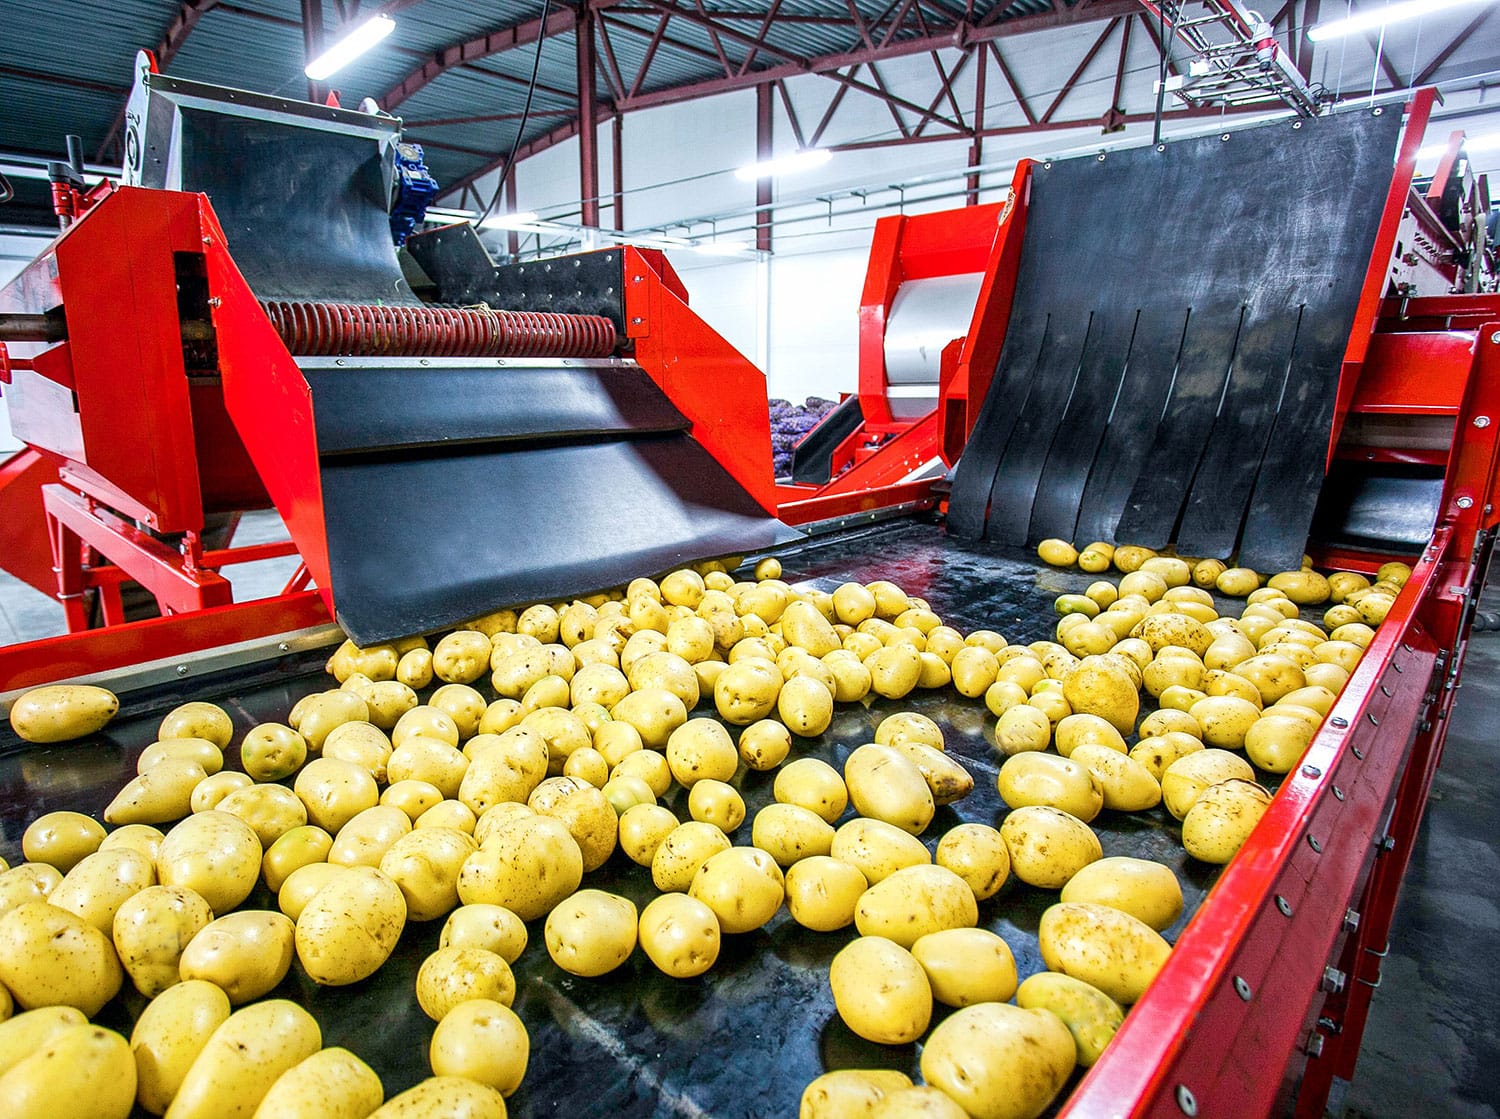 potato production facility - potato processing design and engineering